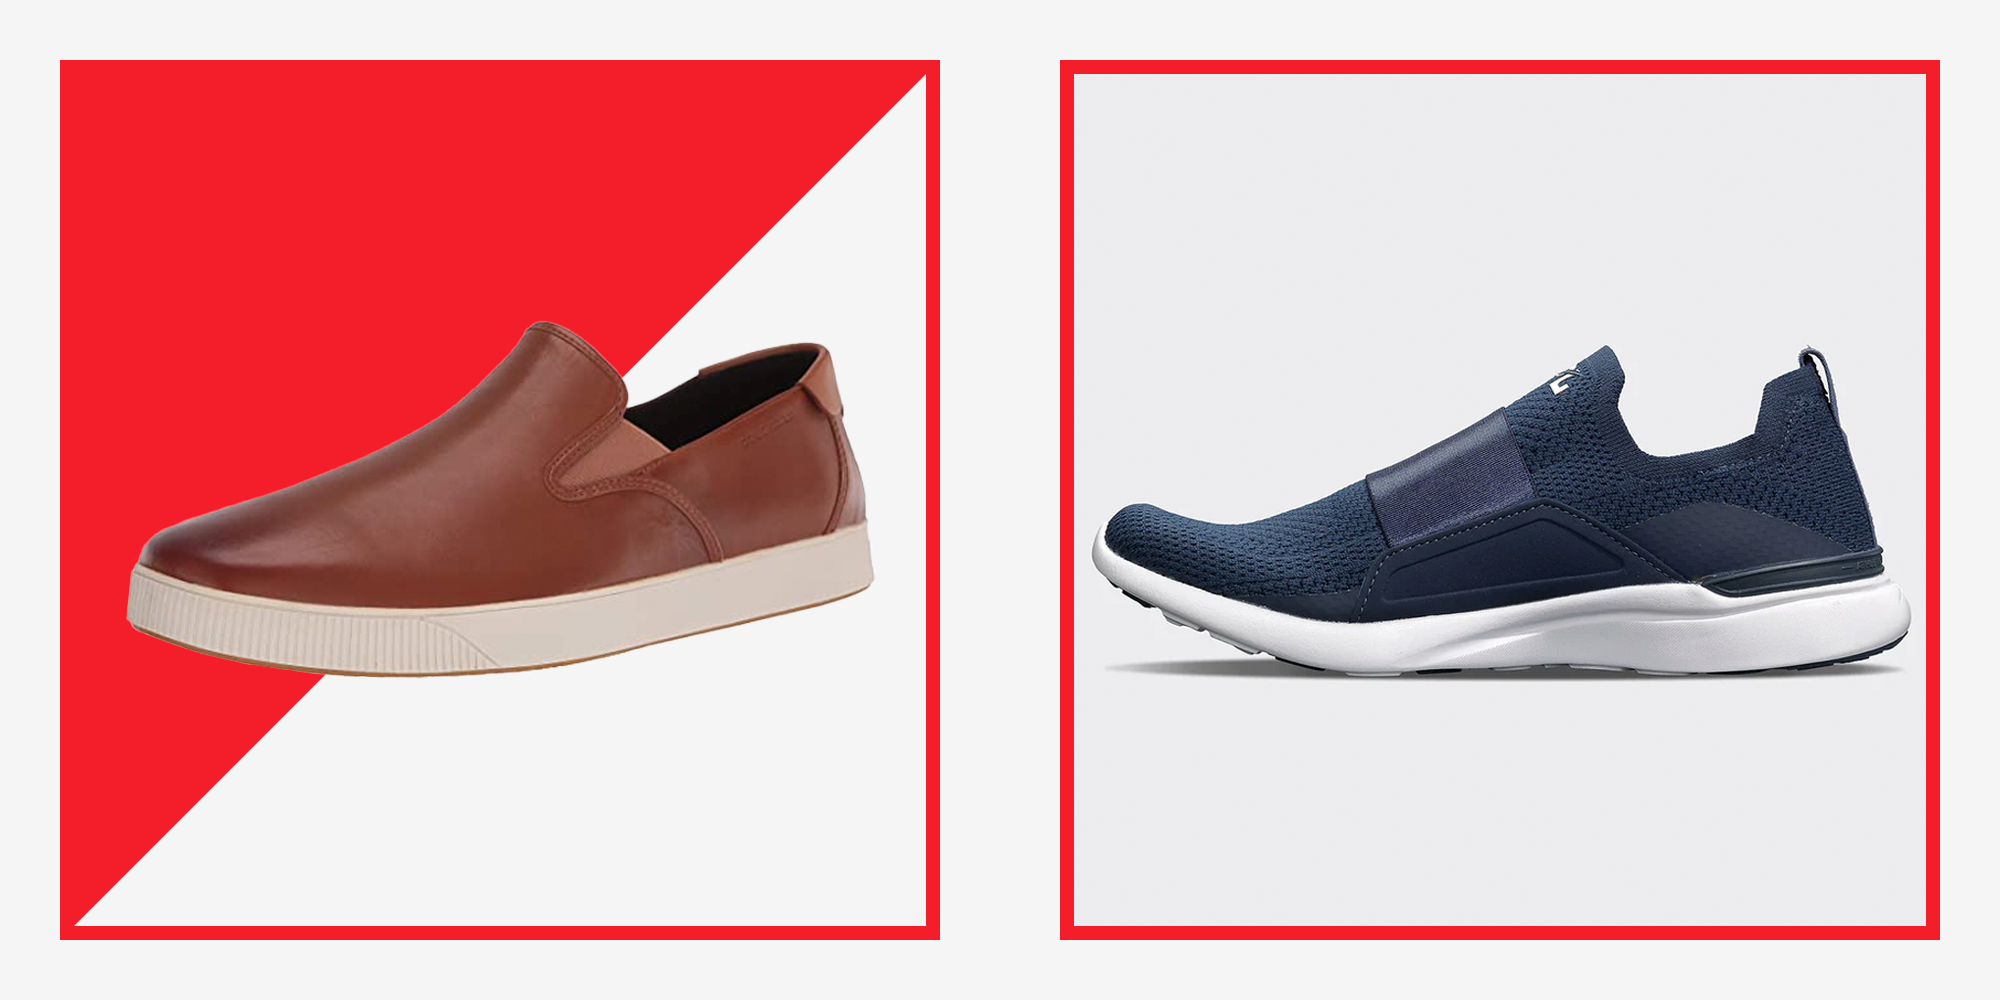 AMAPO Sneakers for Men Comfortable Men Shoes Casual Men's Lightweight Sneakers Slip-on Walking Shoes 